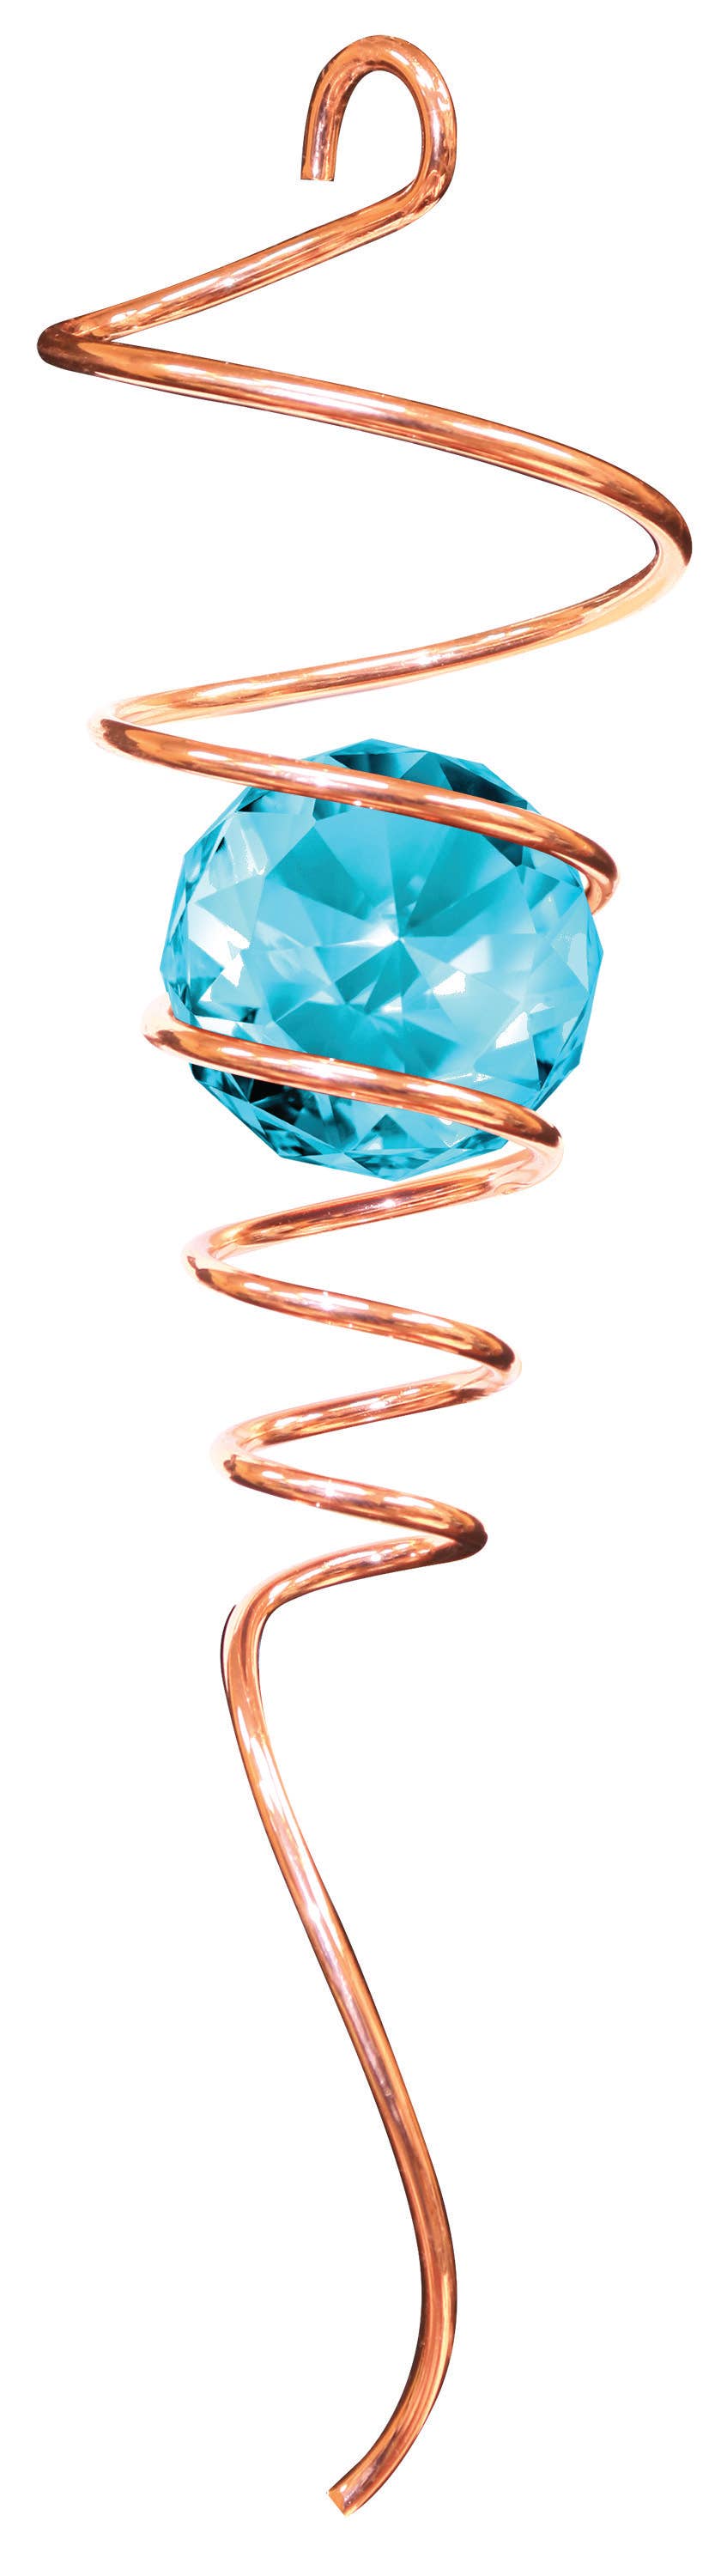 Copper / Aqua - Crystal Spiral Tail